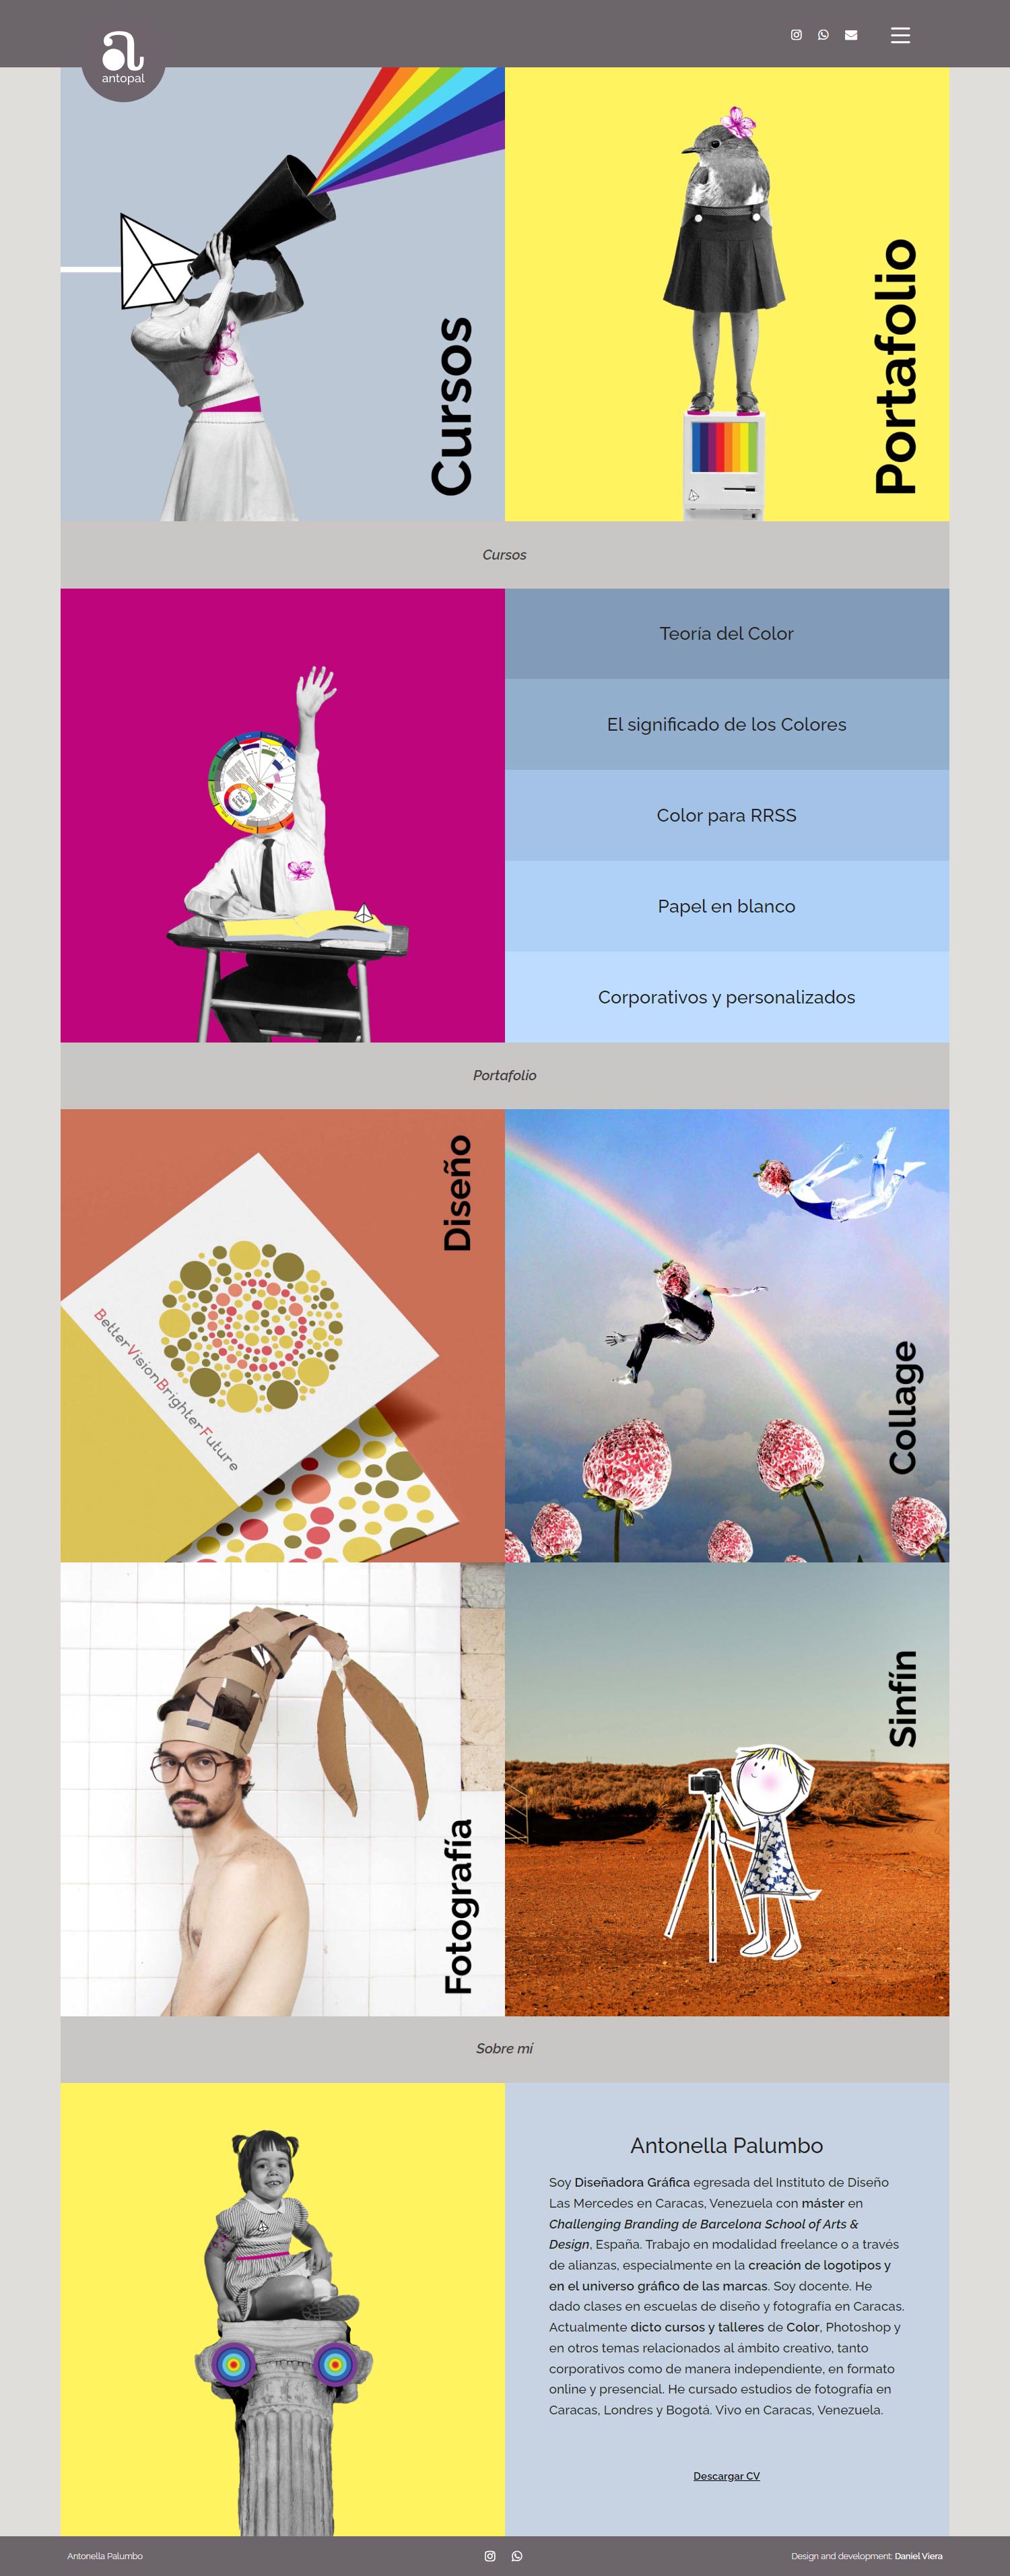 Antonella Palumbo | Portfolio of the graphic designer Antonella Palumbo - Antopal. Developed for WordPress, with infite scroll and bootstrap